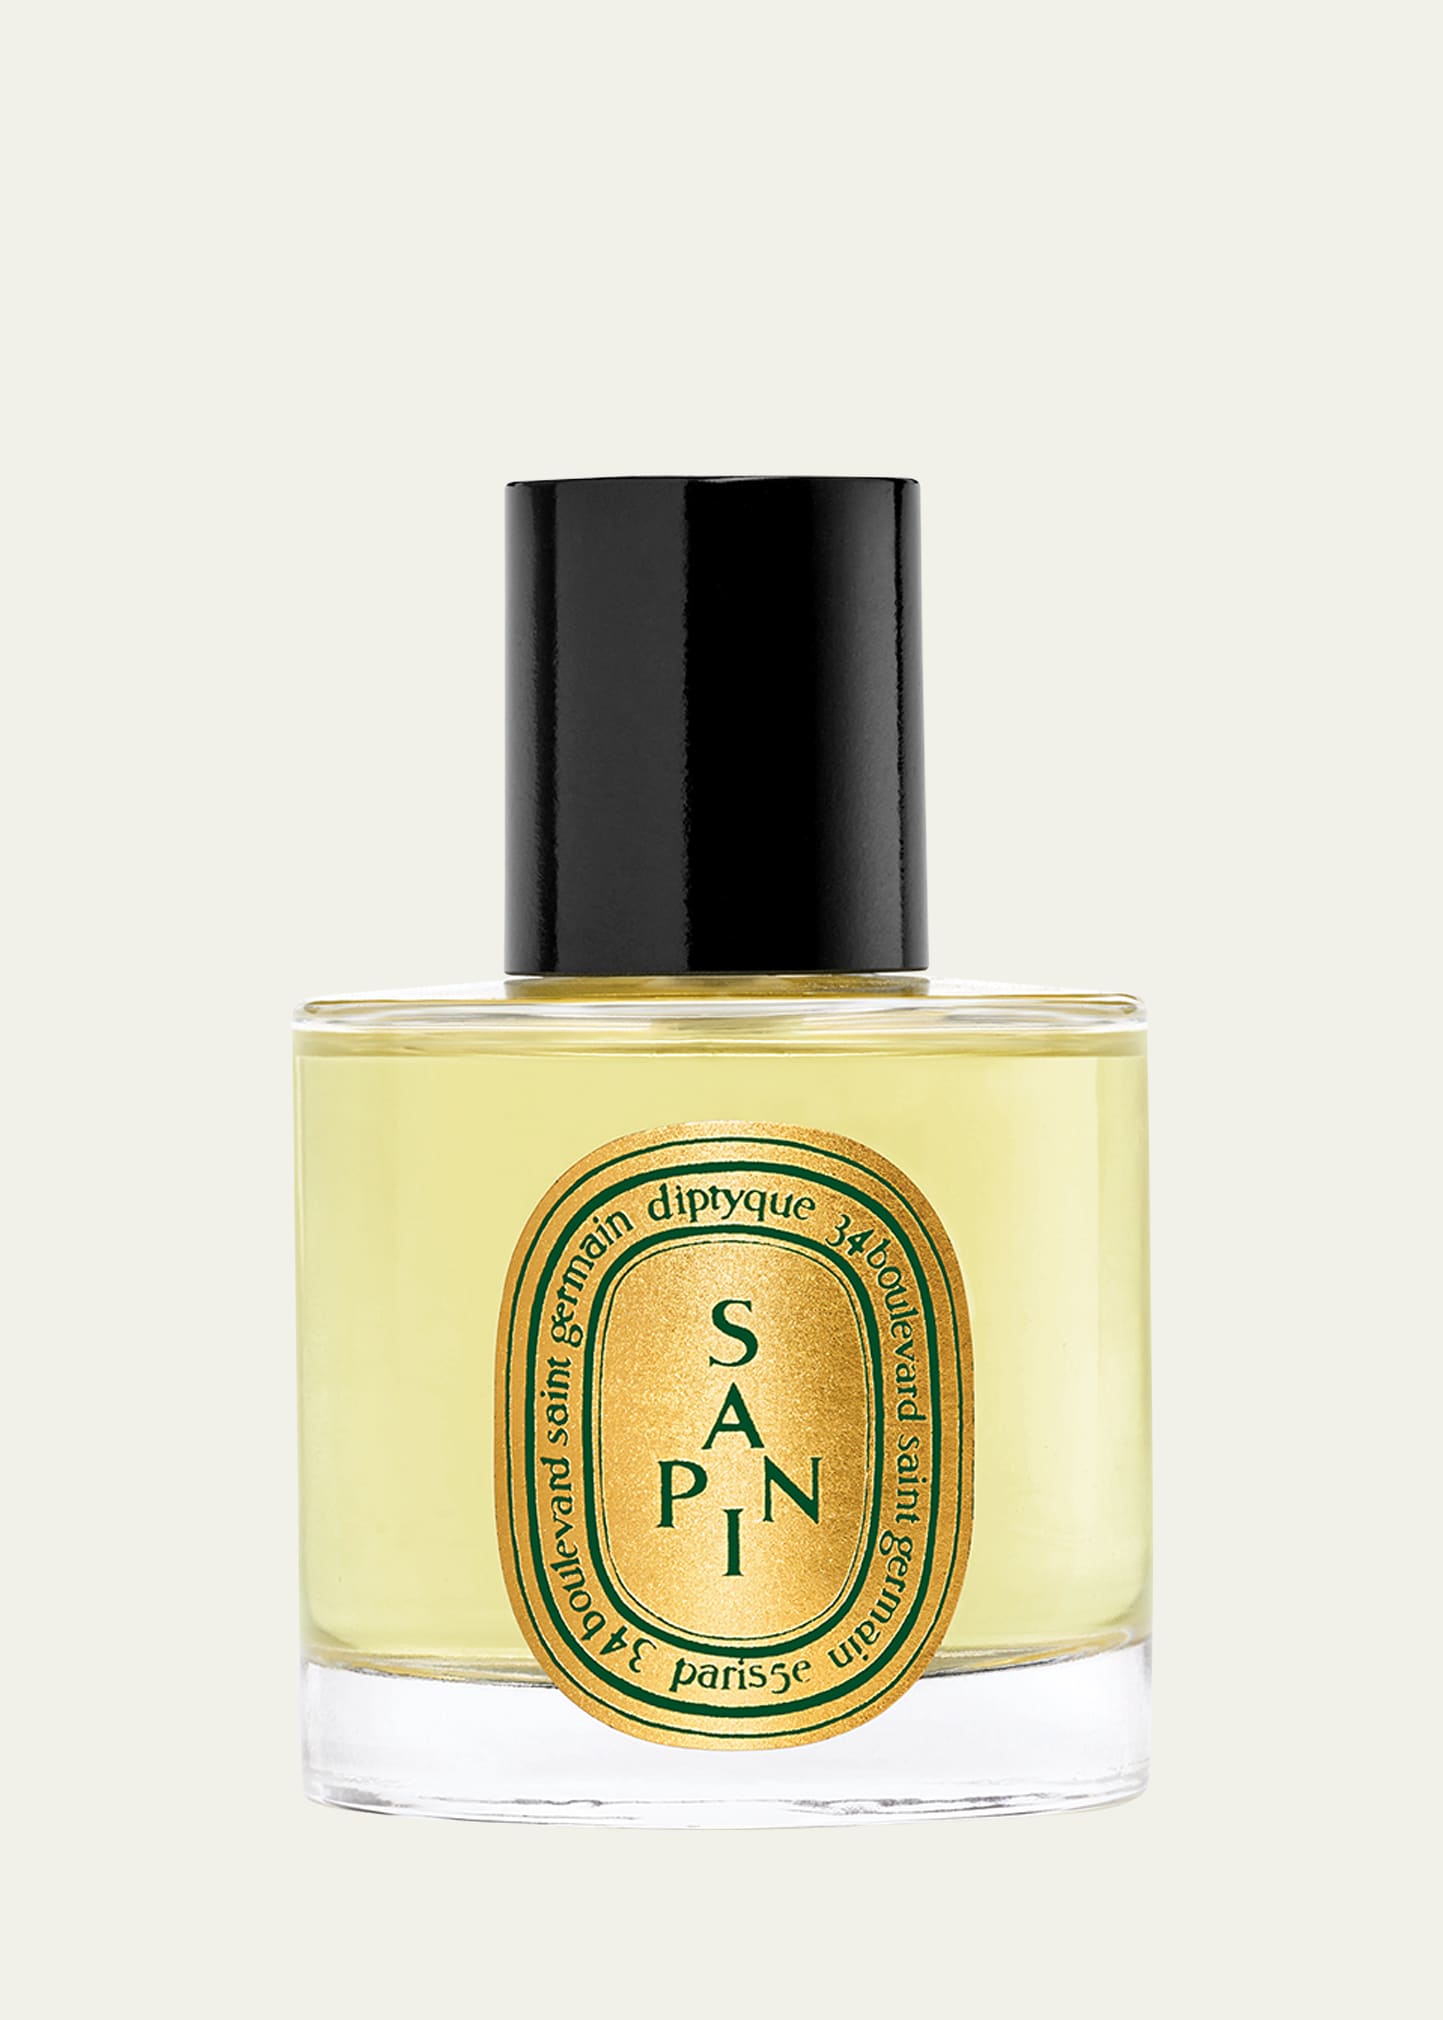 Sapin (Pine) Fragrance Room Spray - Limited Edition